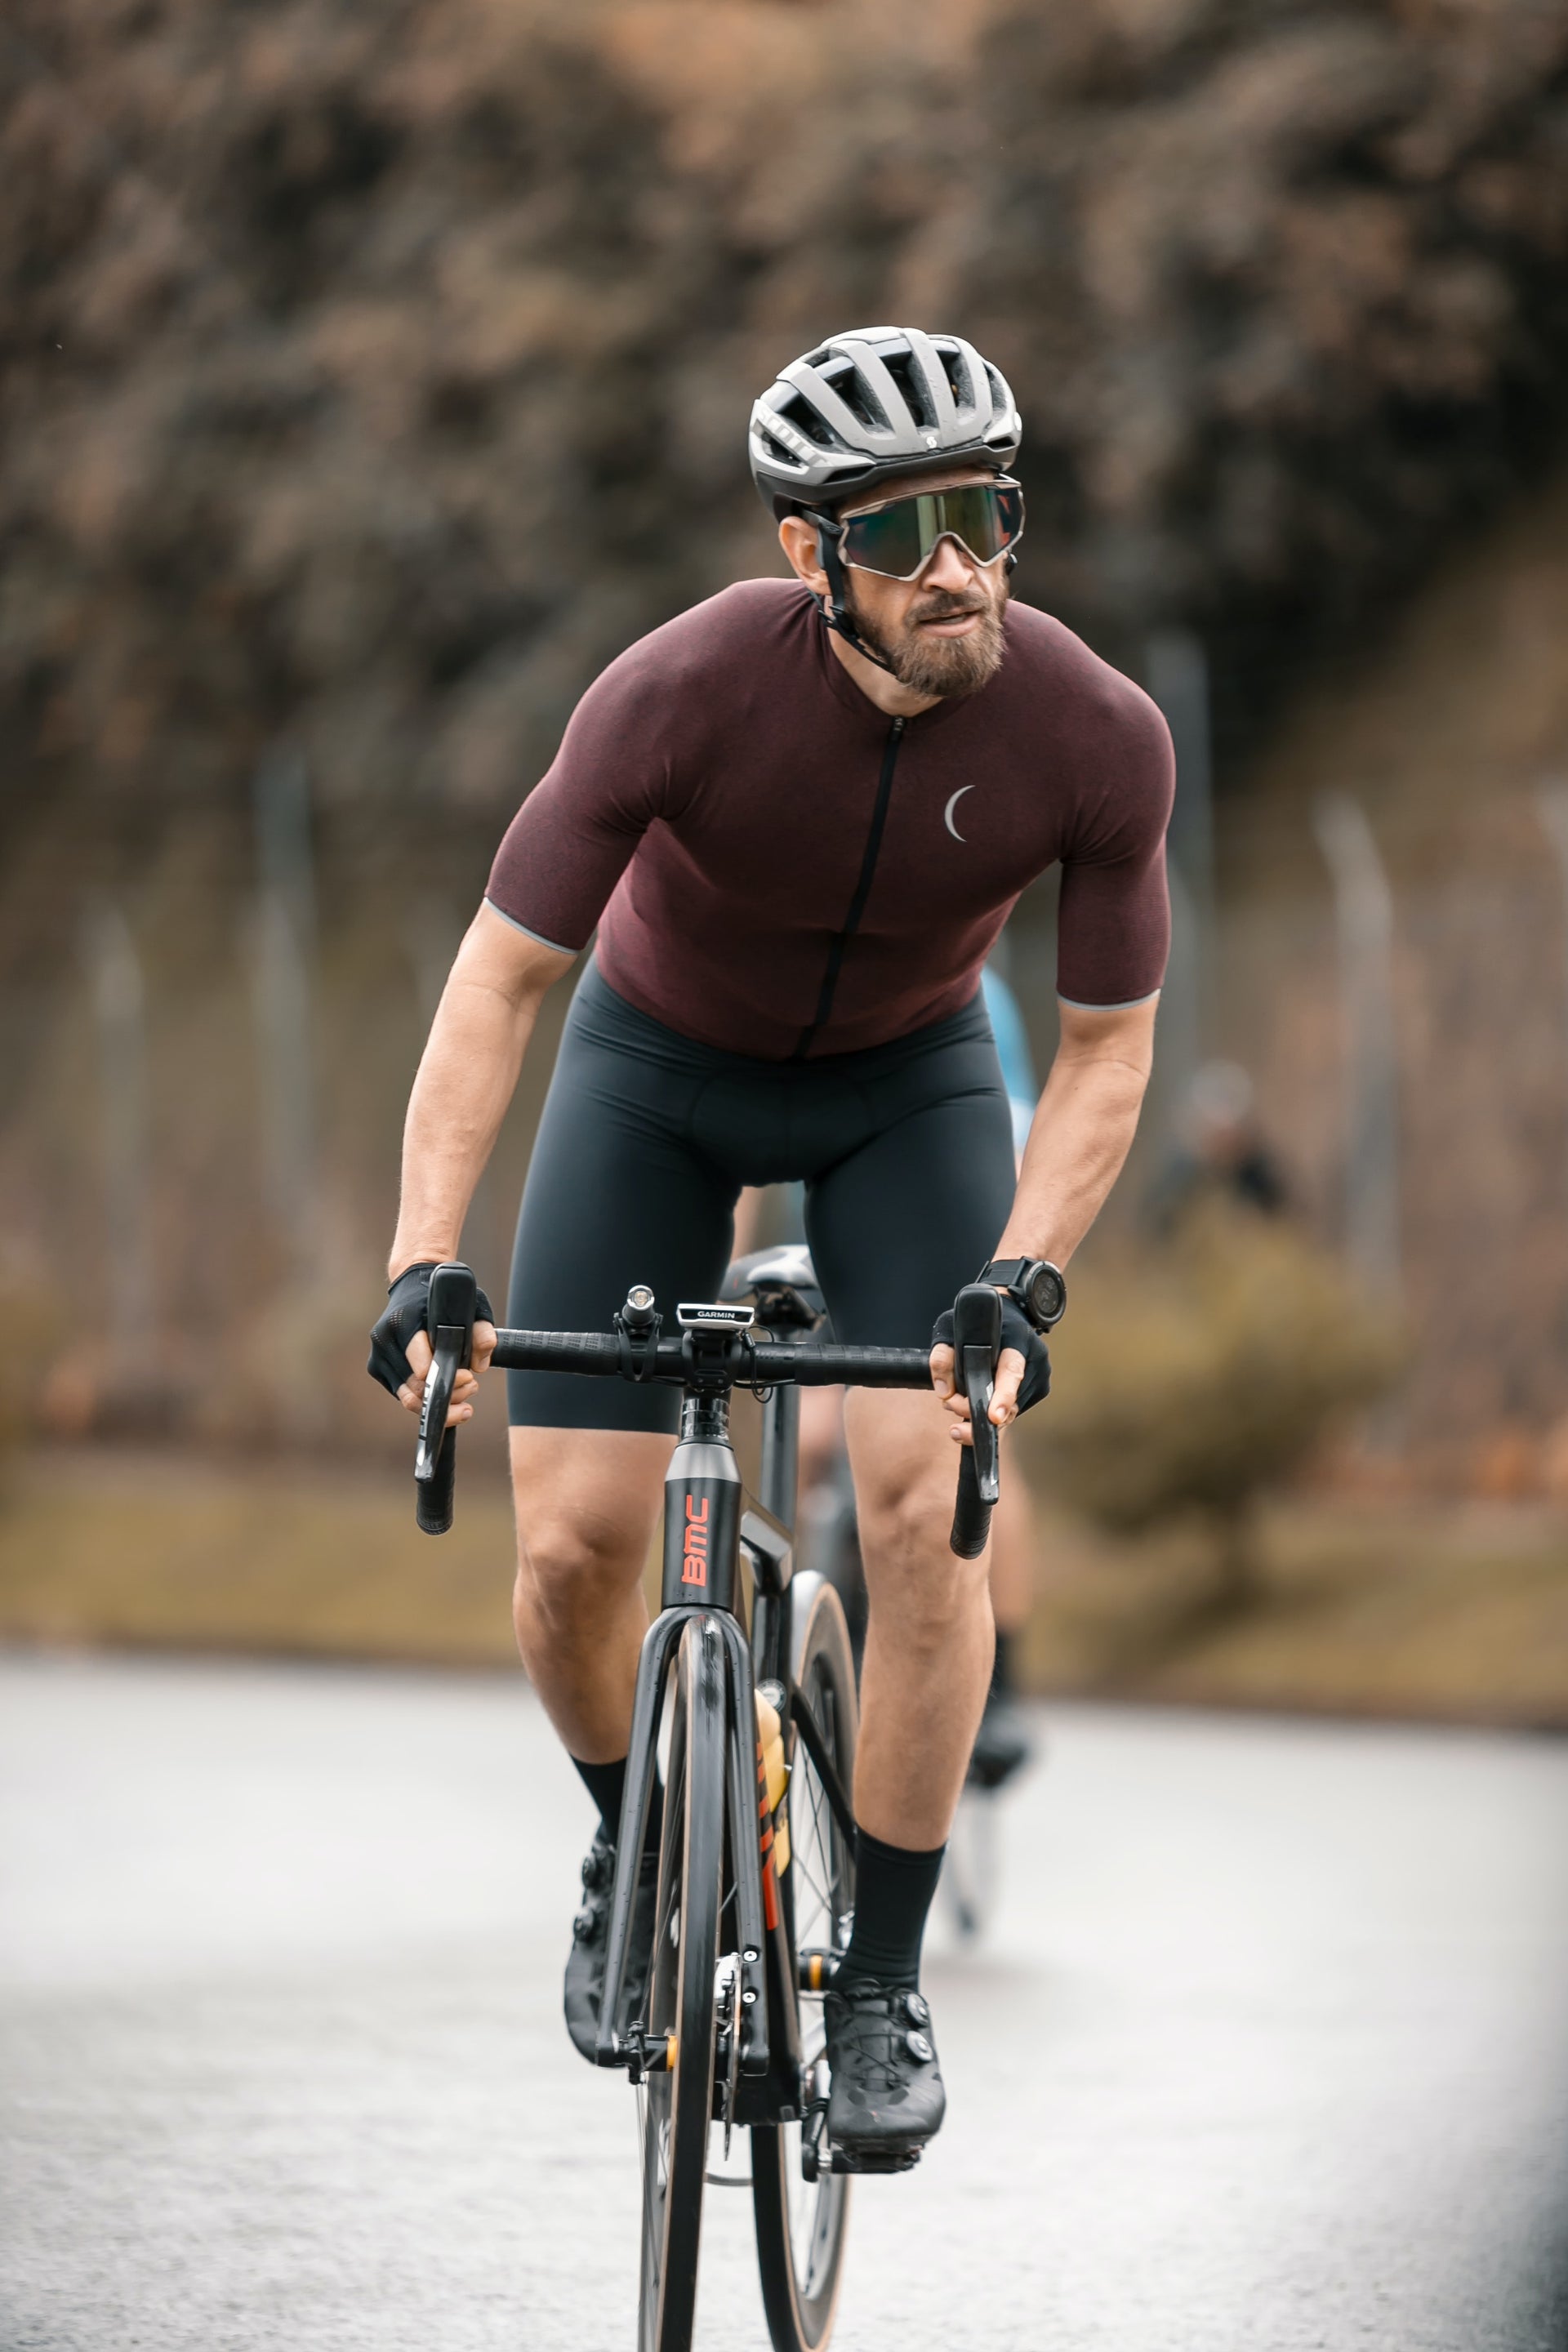 Men's Long Sleeve Custom Cycling Jersey, Ascent